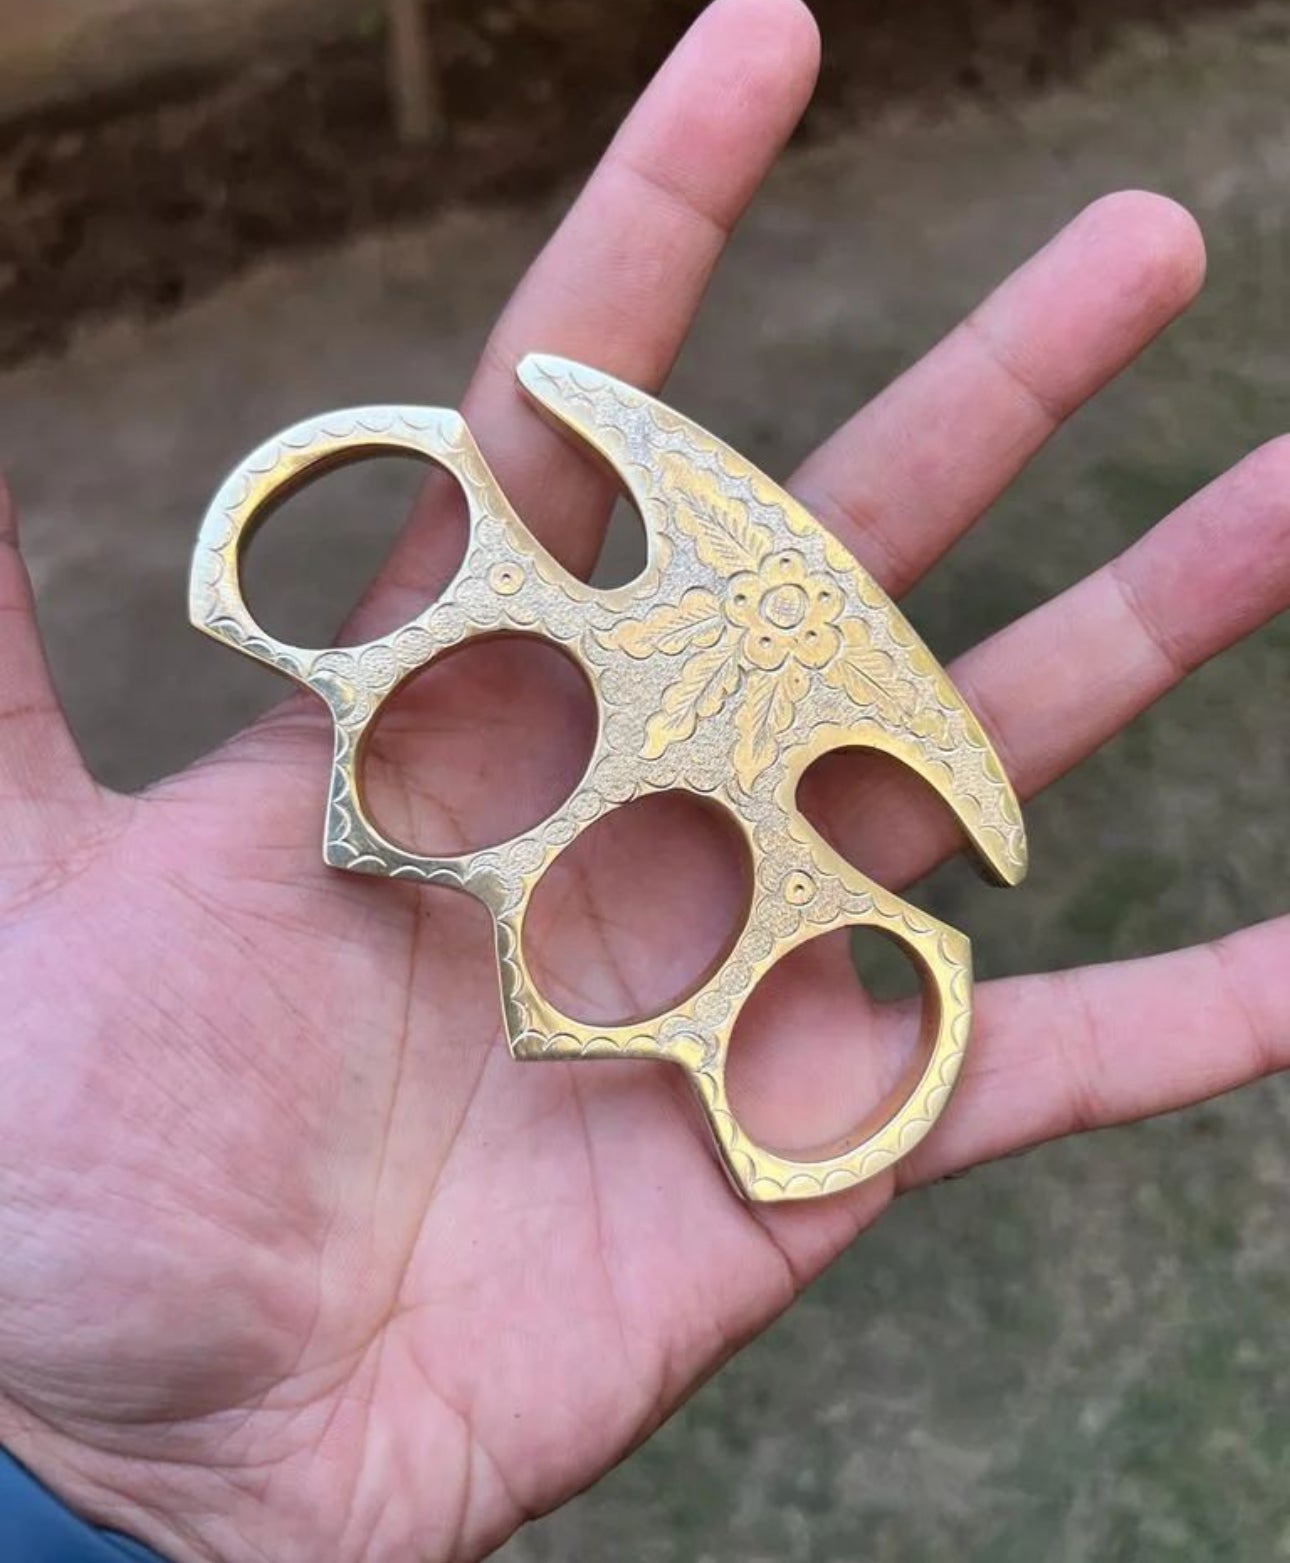 Handmade Engraved Brass knuckle